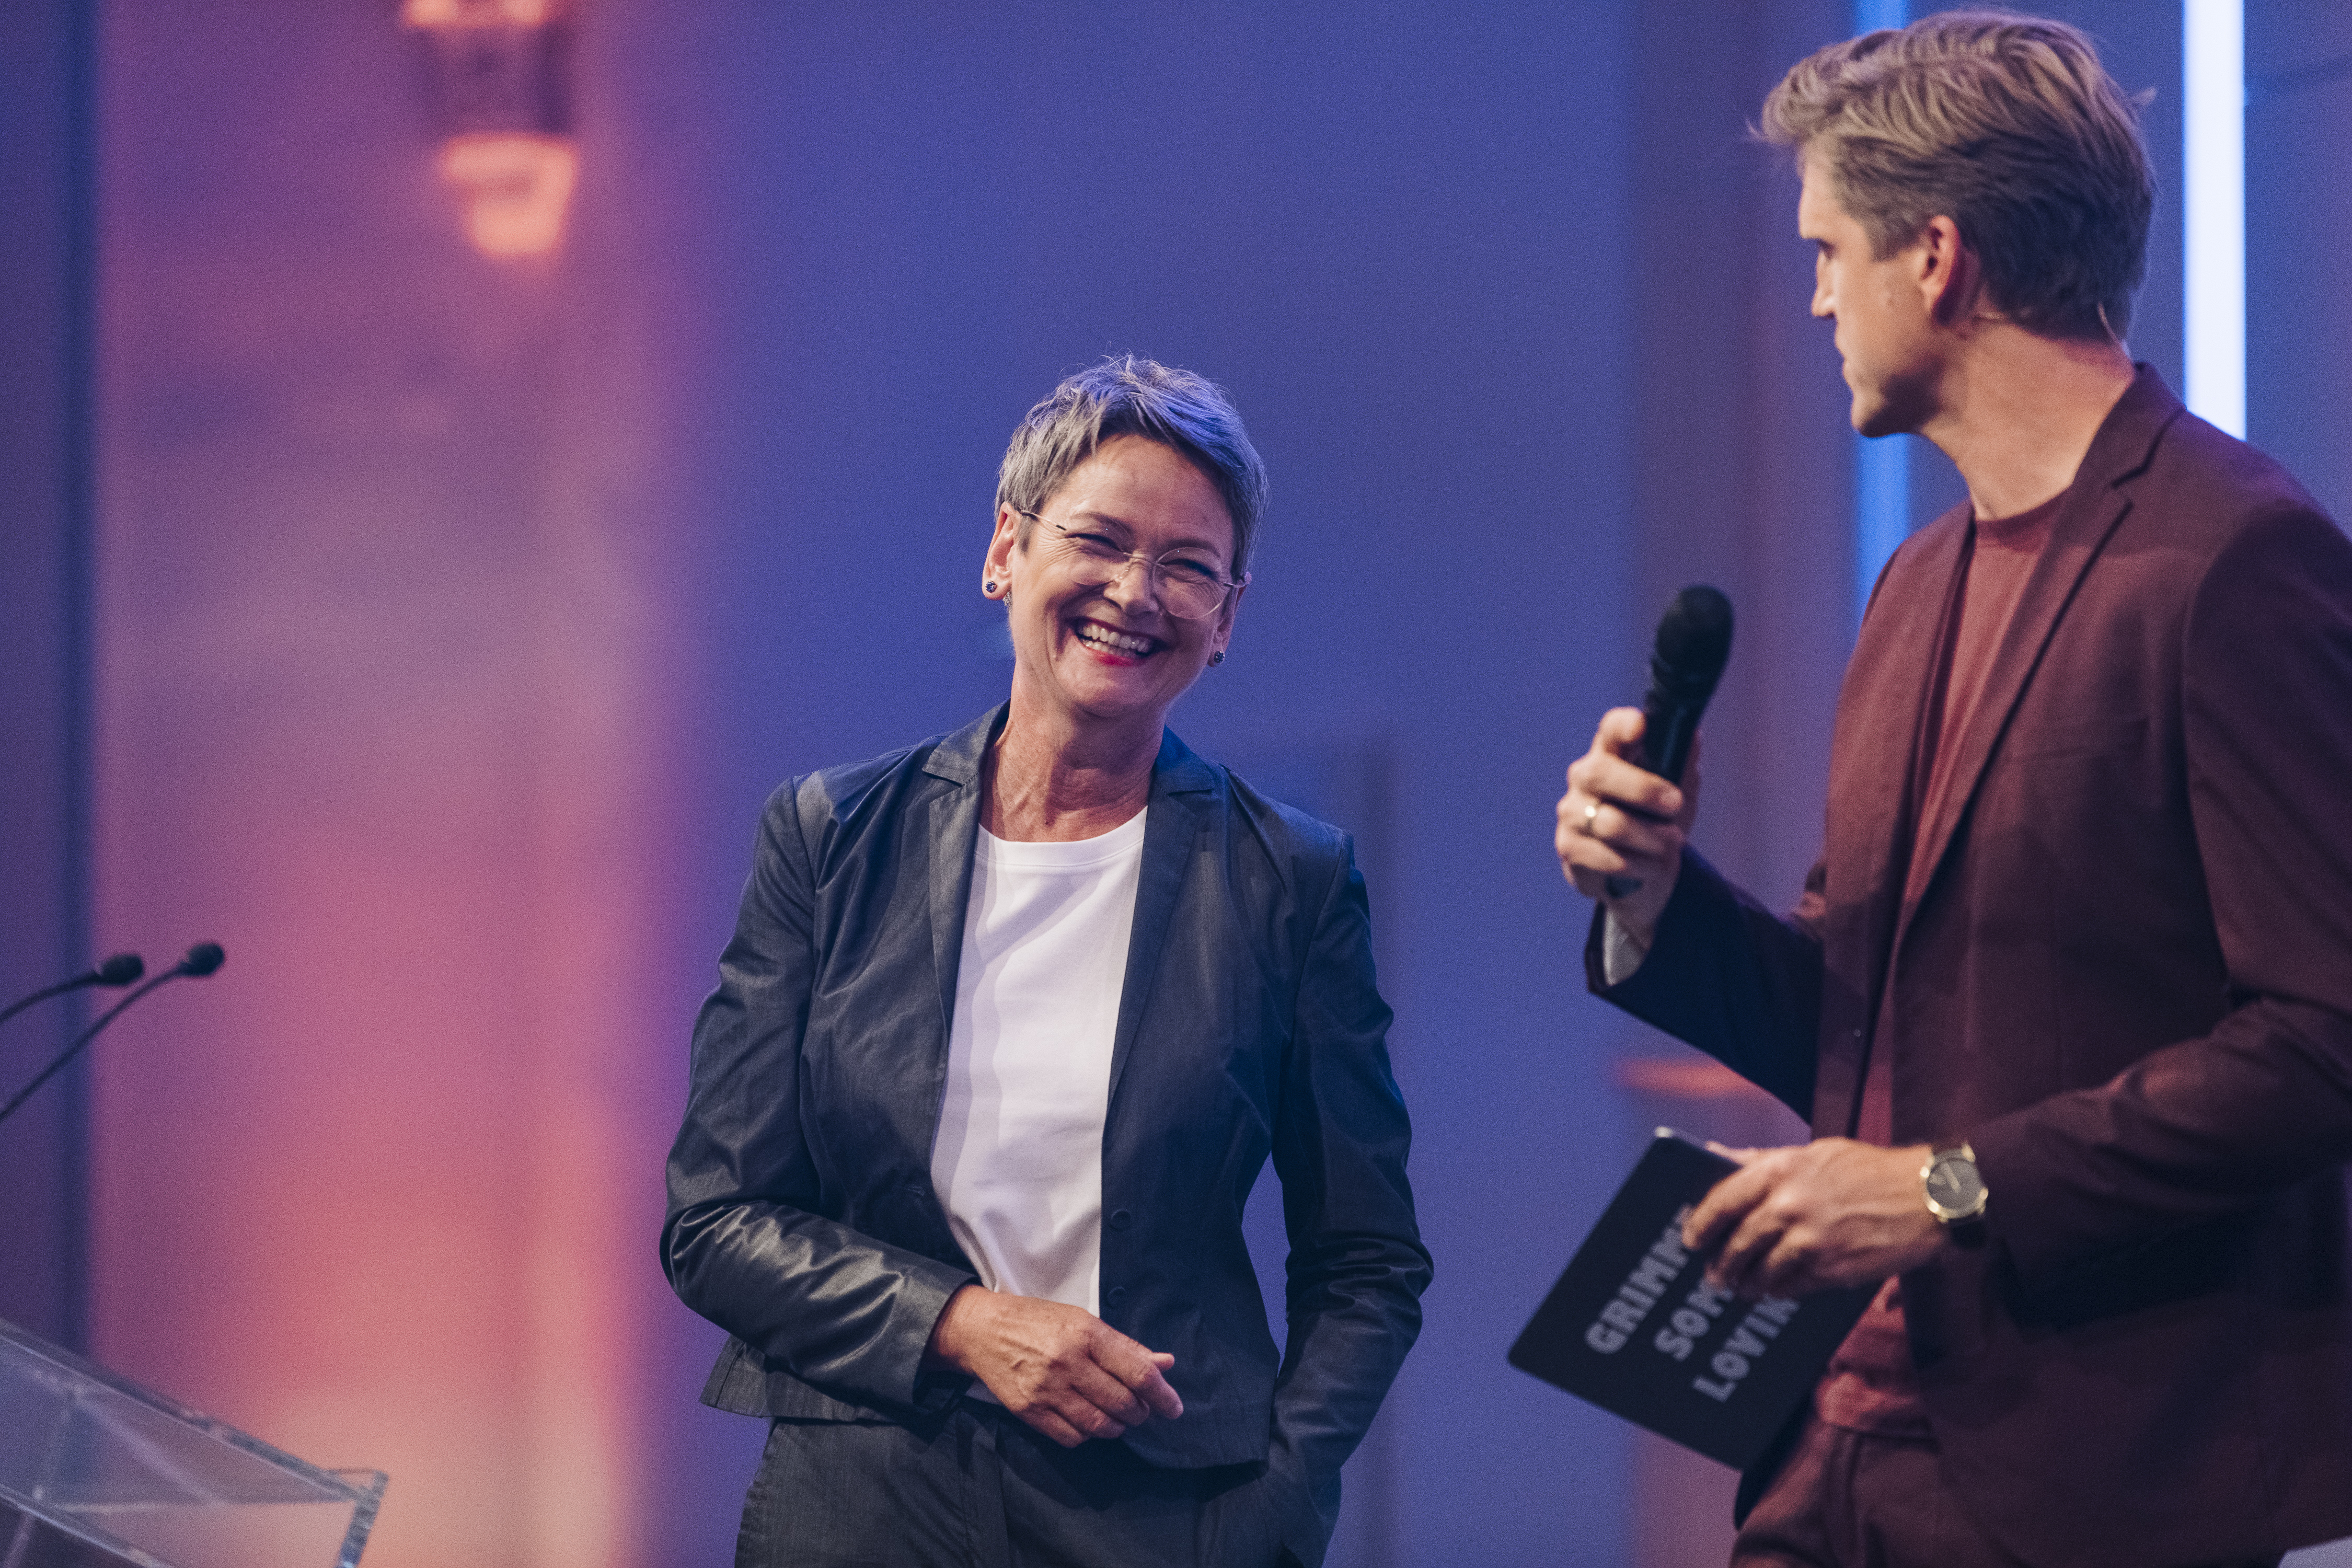 Donnerstag 15.06.2023, 

Grimme Online Award

Copyright:
Mareen Meyer